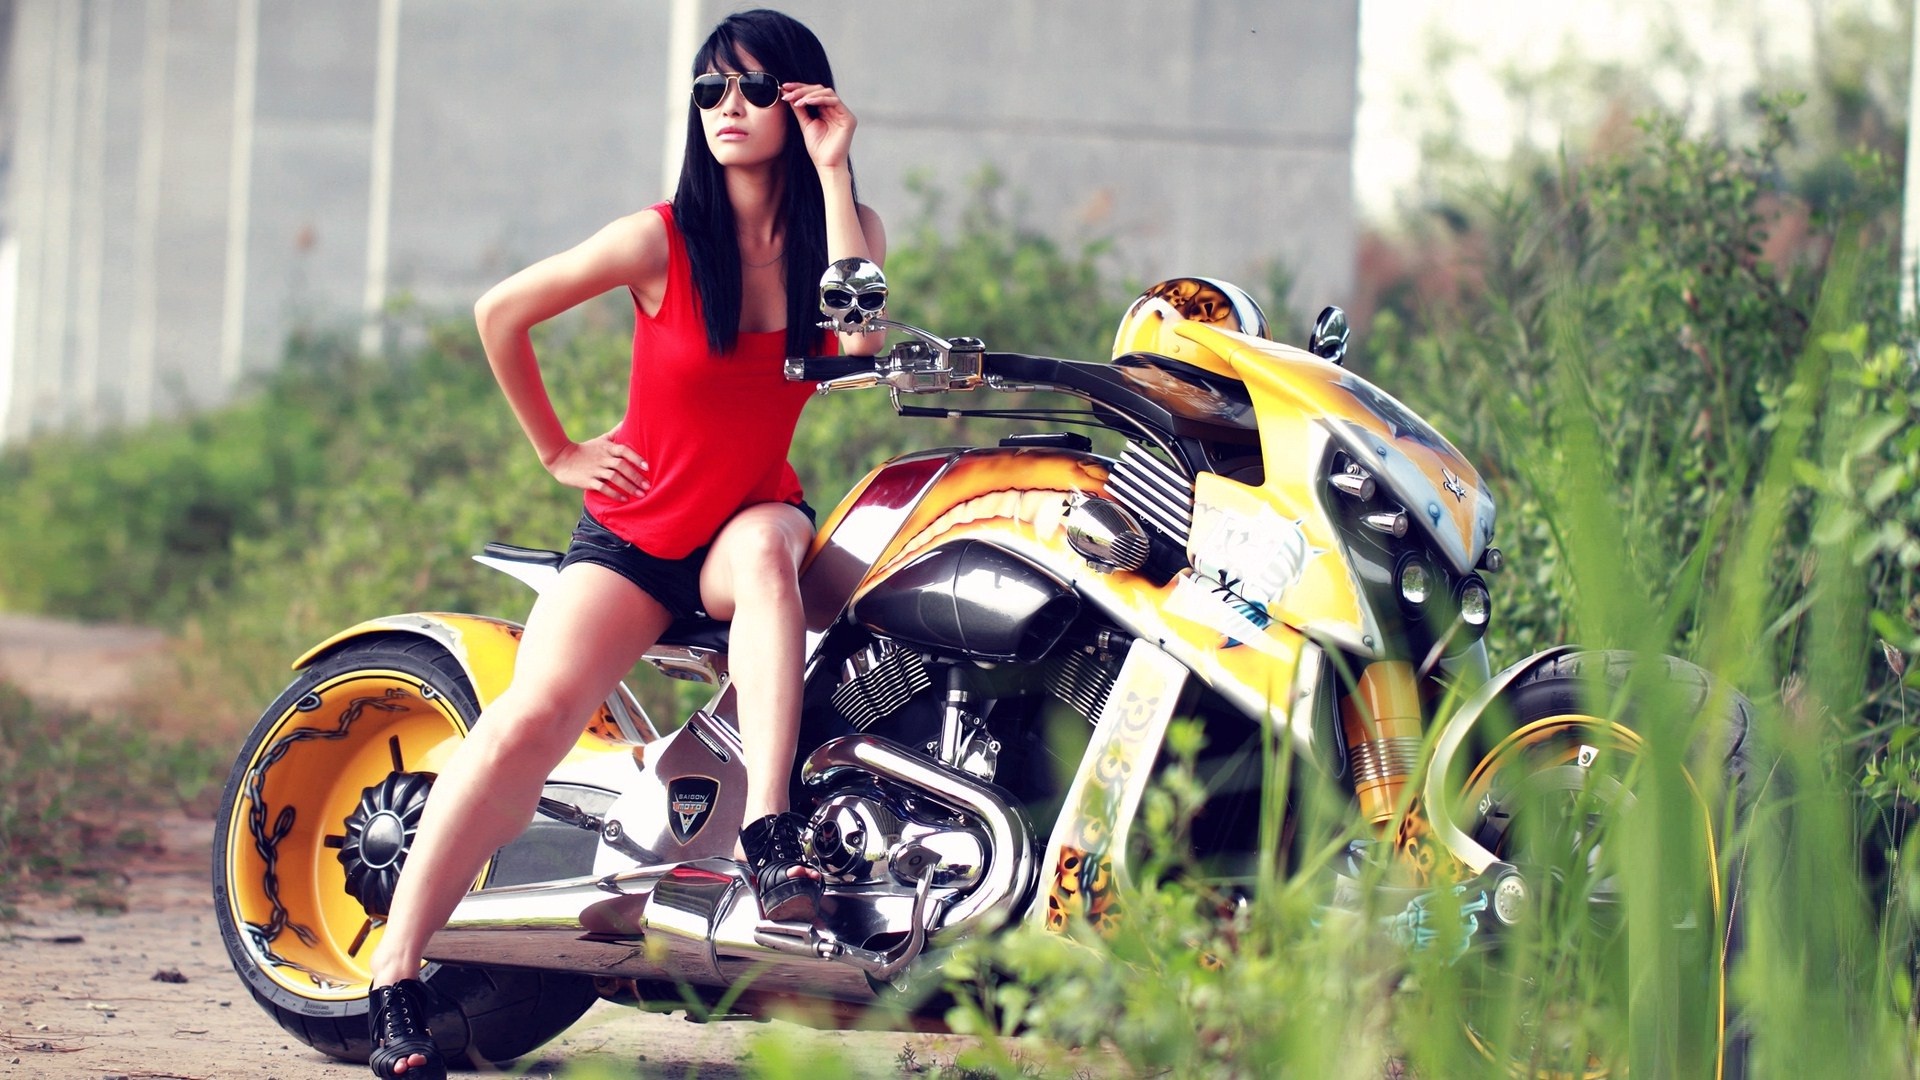 1920x1080 Hot modern stylish girl with super bike wallpapers